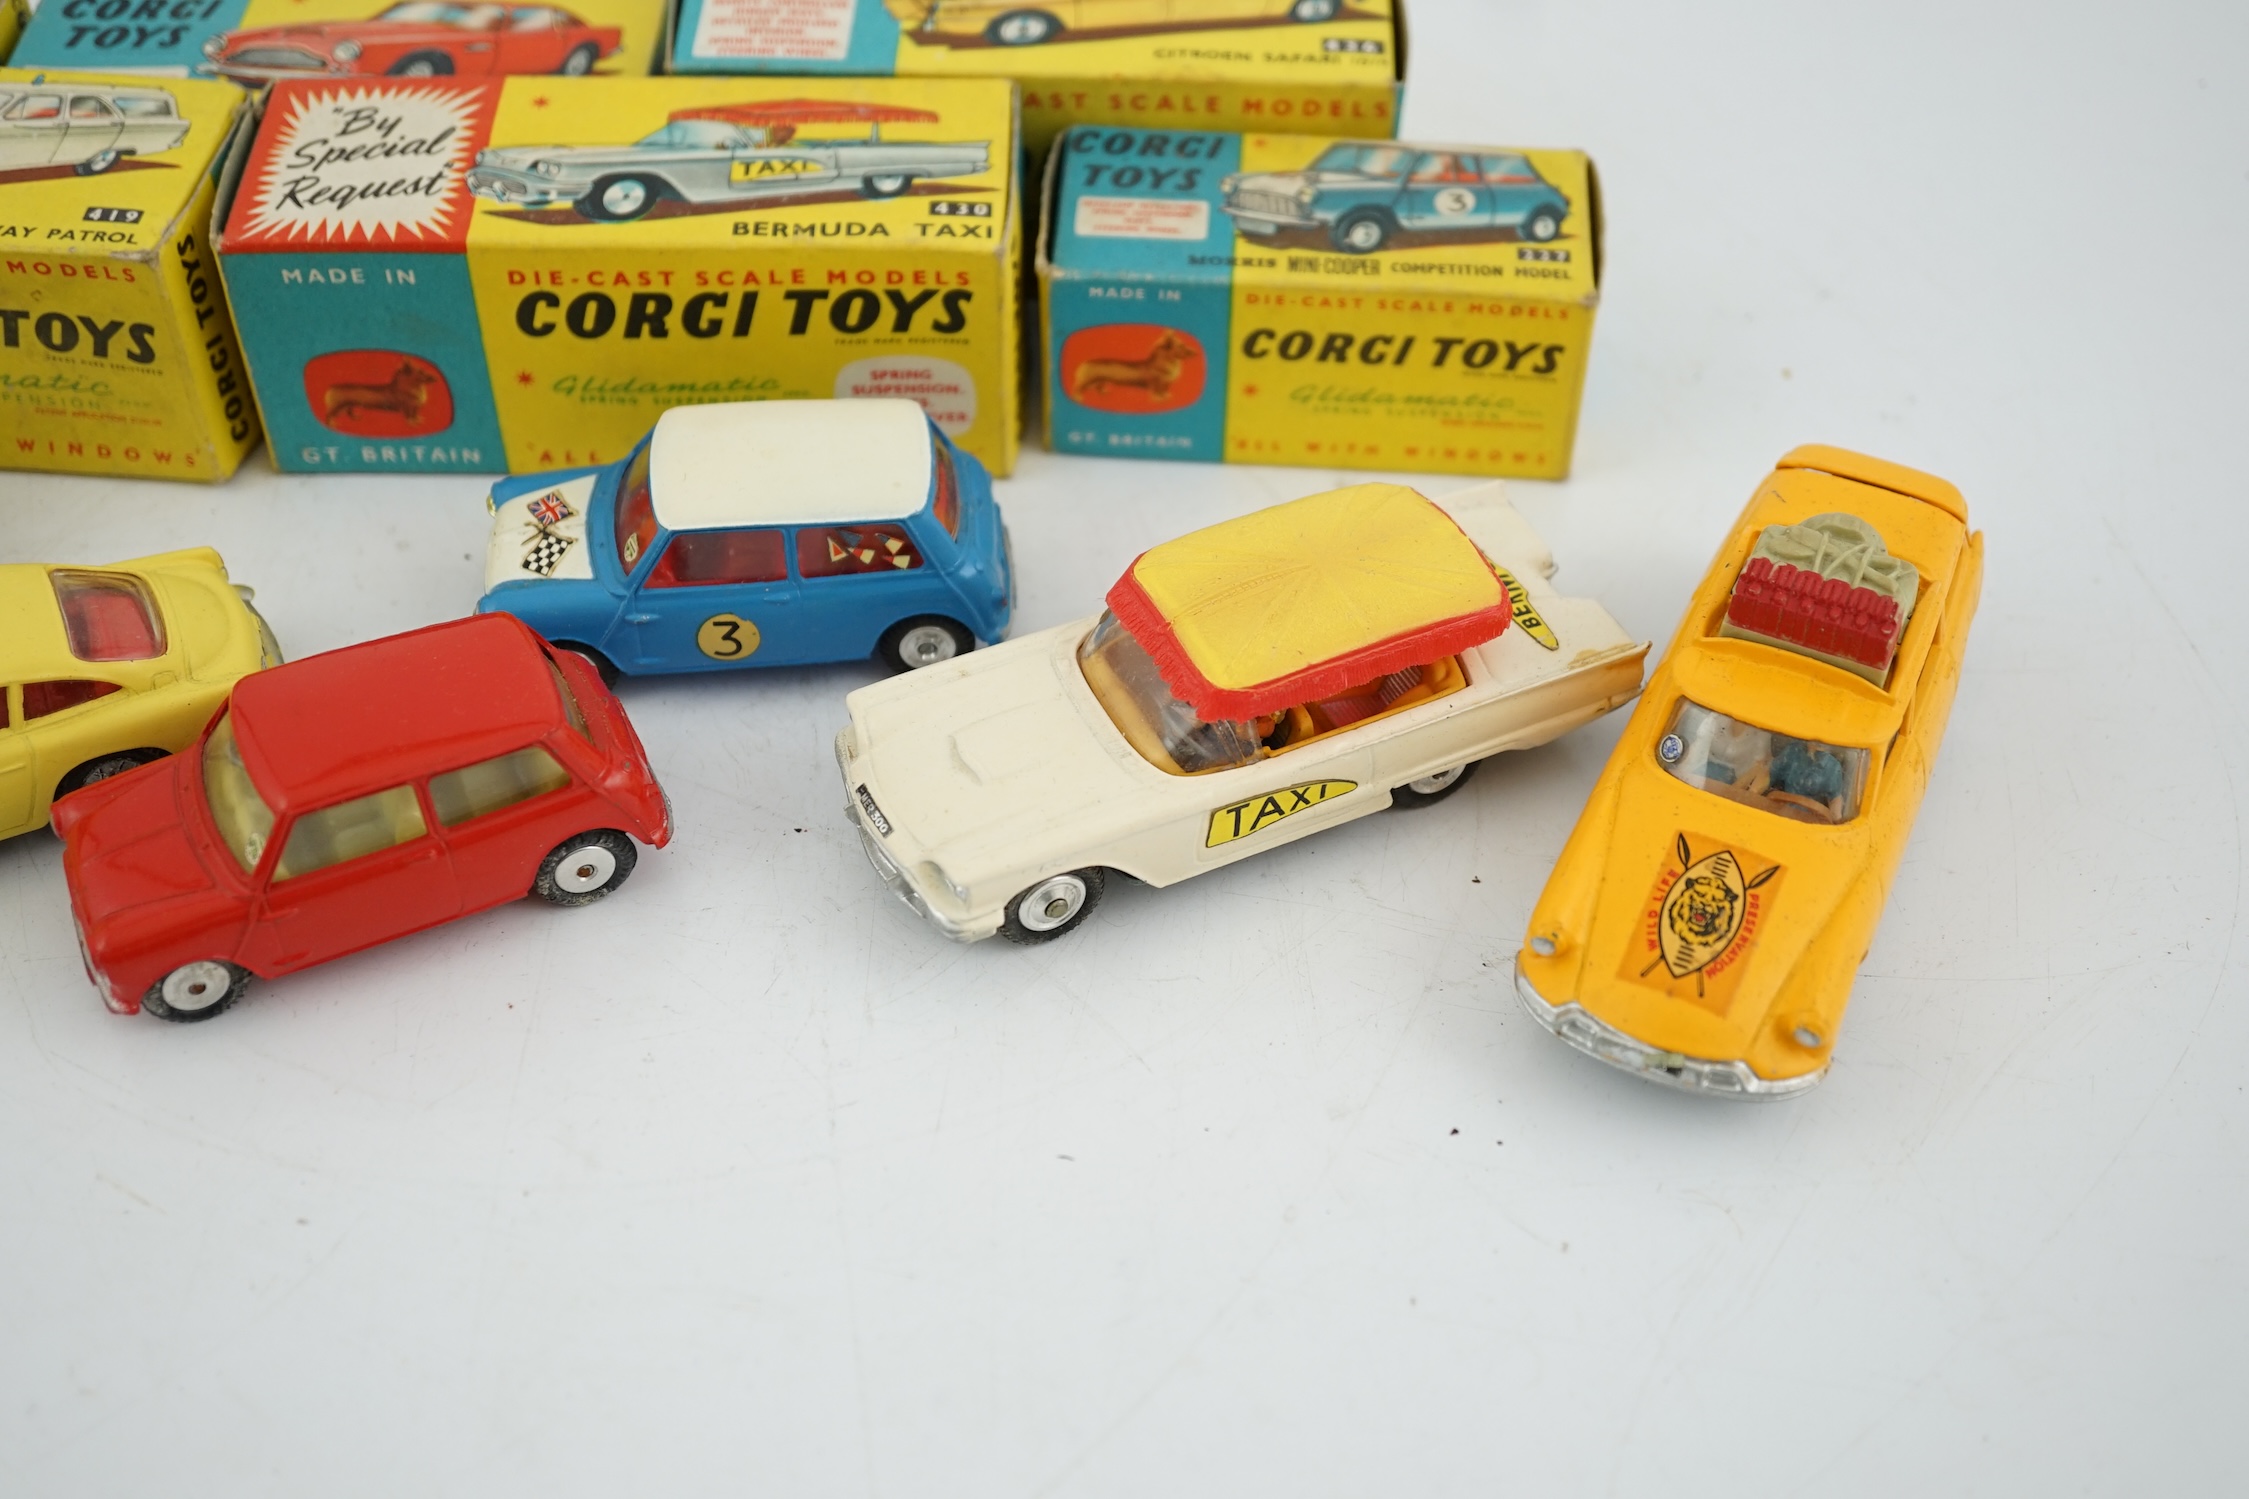 Six boxed Corgi Toys cars; Aston Martin DB4 in yellow (218), Austin seven in red (225), Morris Mini Cooper competition model (227), Ford Zephyr motorway patrol (419), Ford Thunderbird Bermuda Taxi (430), Citroen Safari (